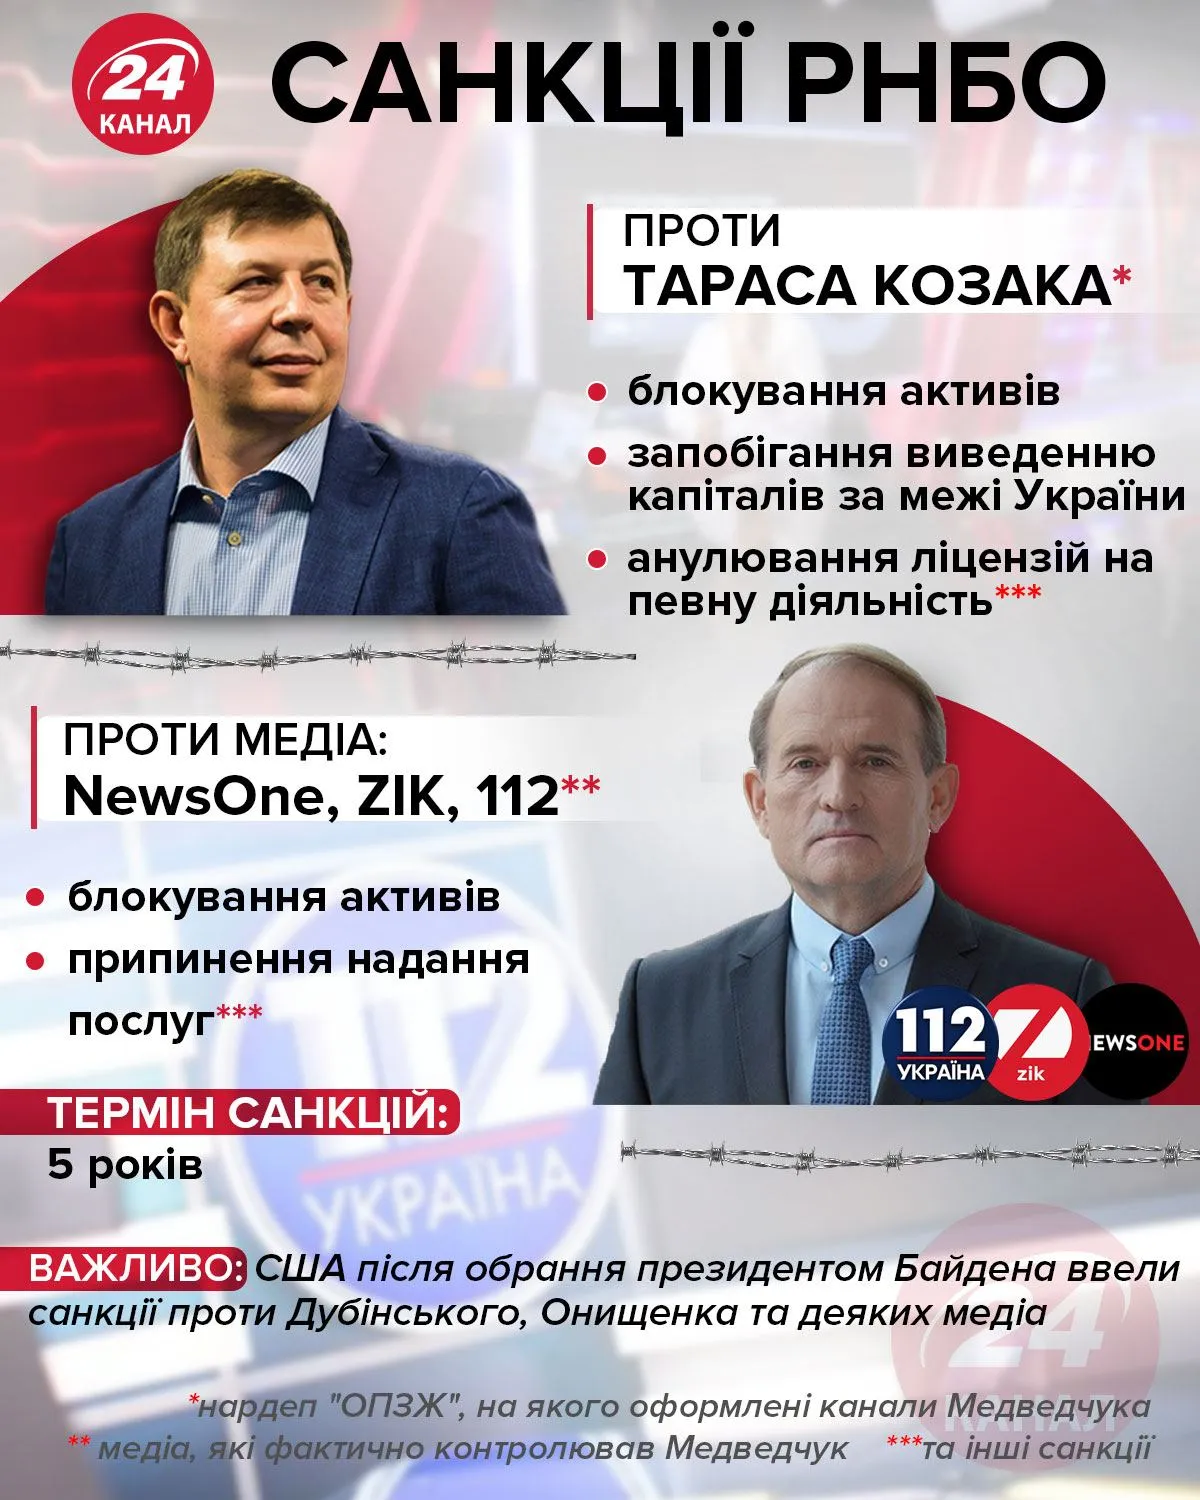 Санкции РНБО против Тараса Козака  Инфографика 24 канала